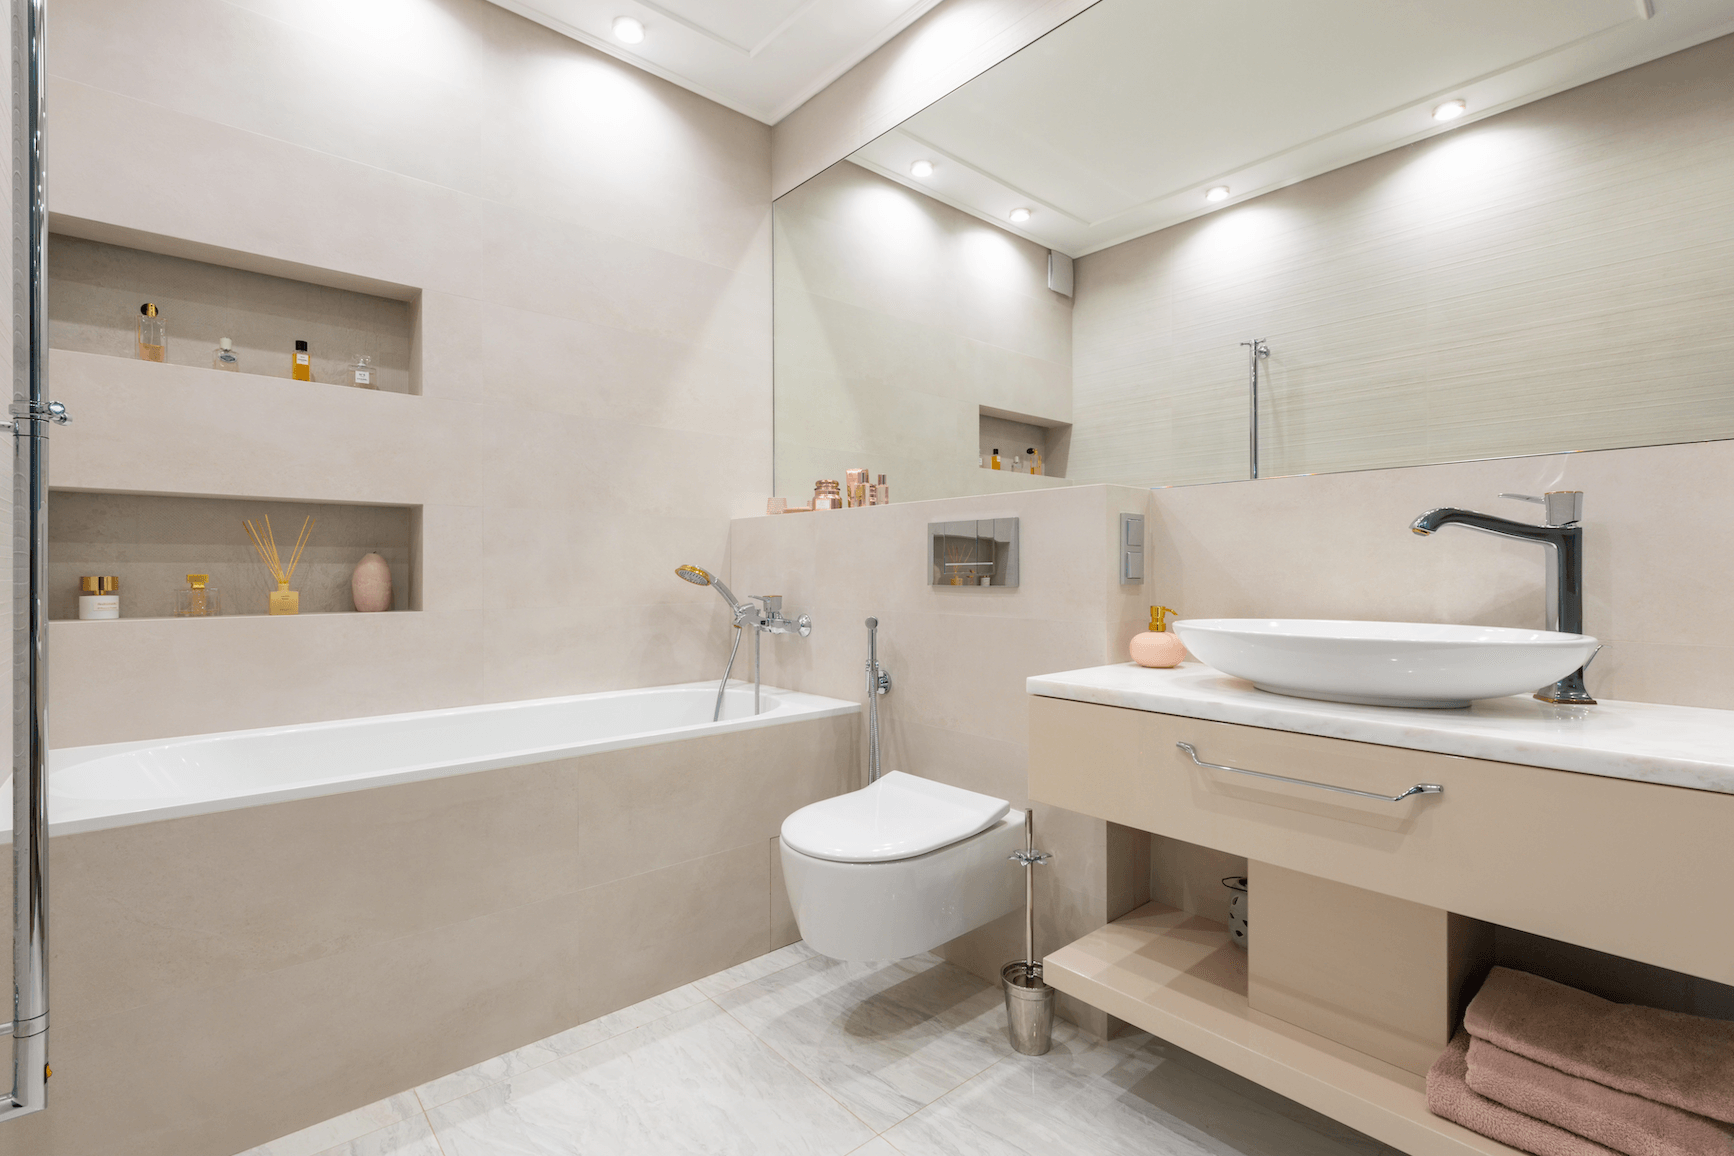 10 Creative Ideas For Adding Storage To Your Luxury Bathroom - Bathroom Design Center